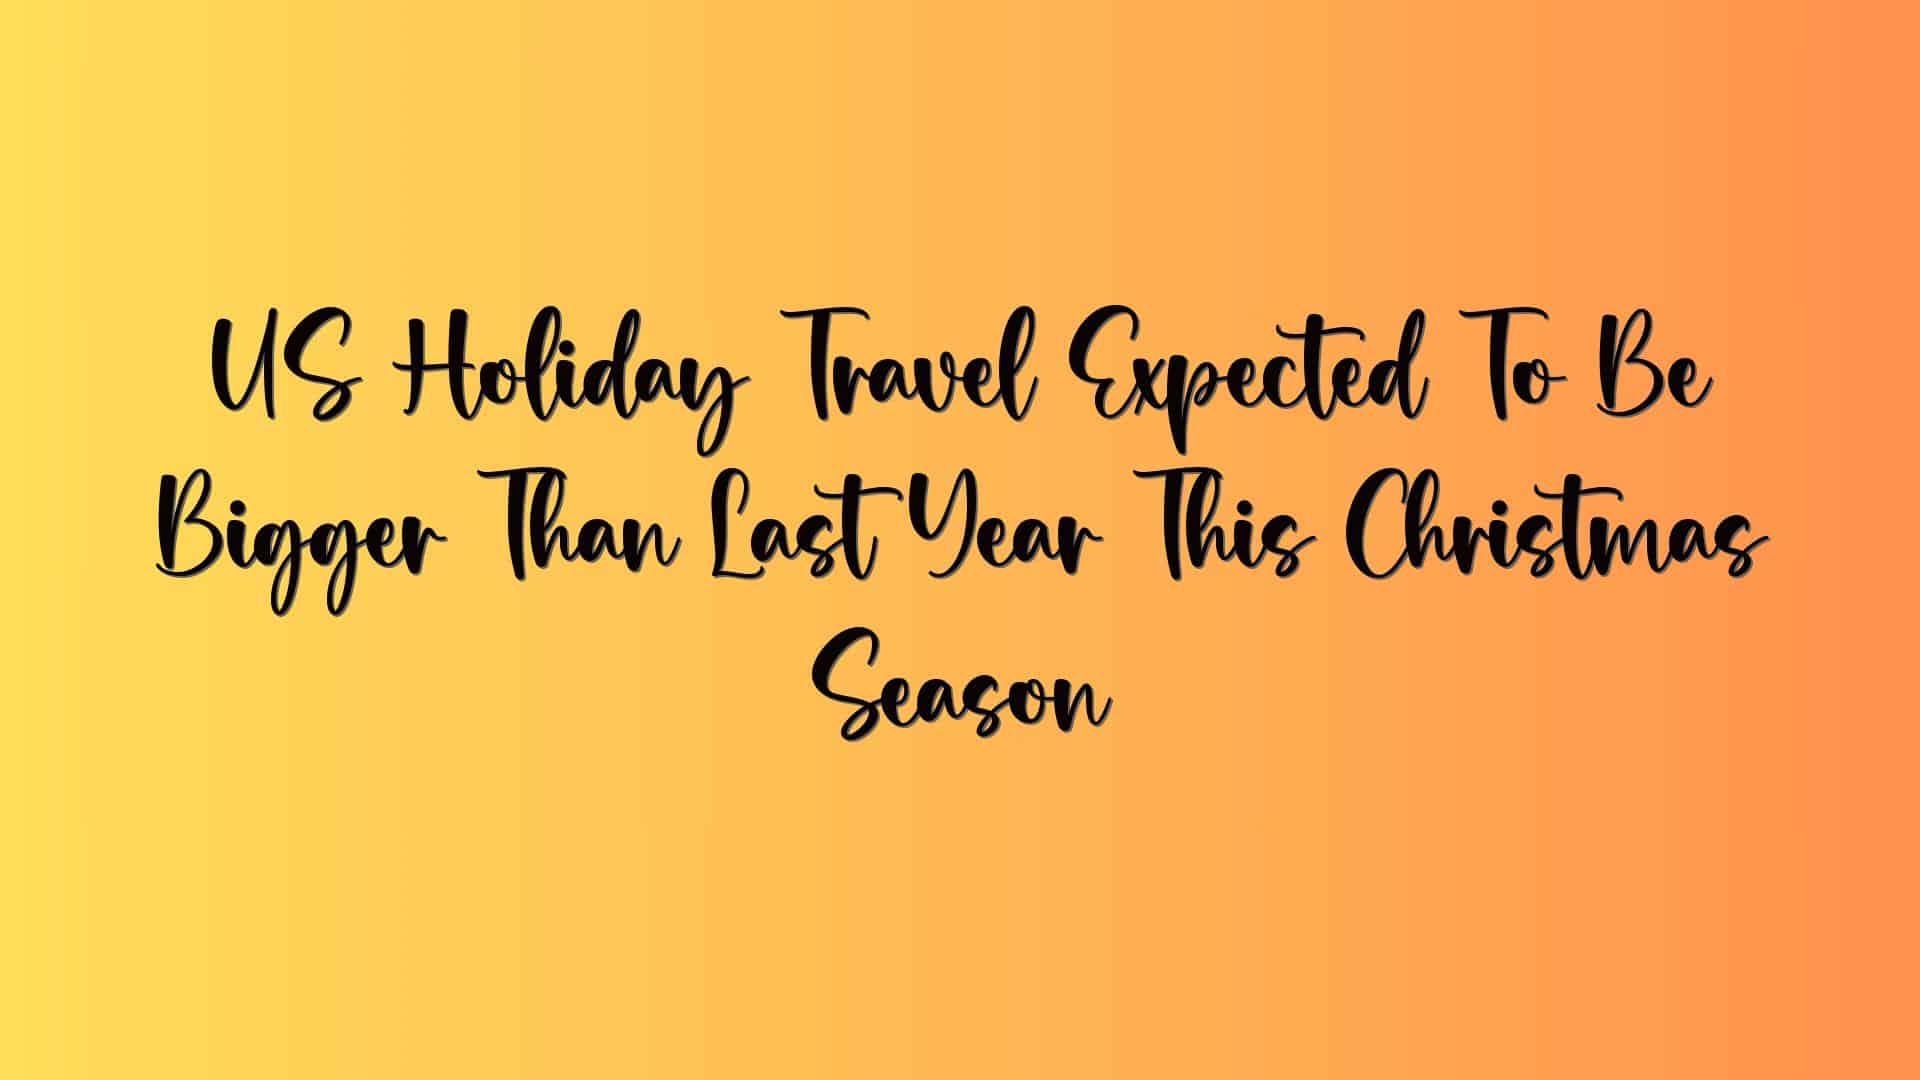 US Holiday Travel Expected To Be Bigger Than Last Year This Christmas Season